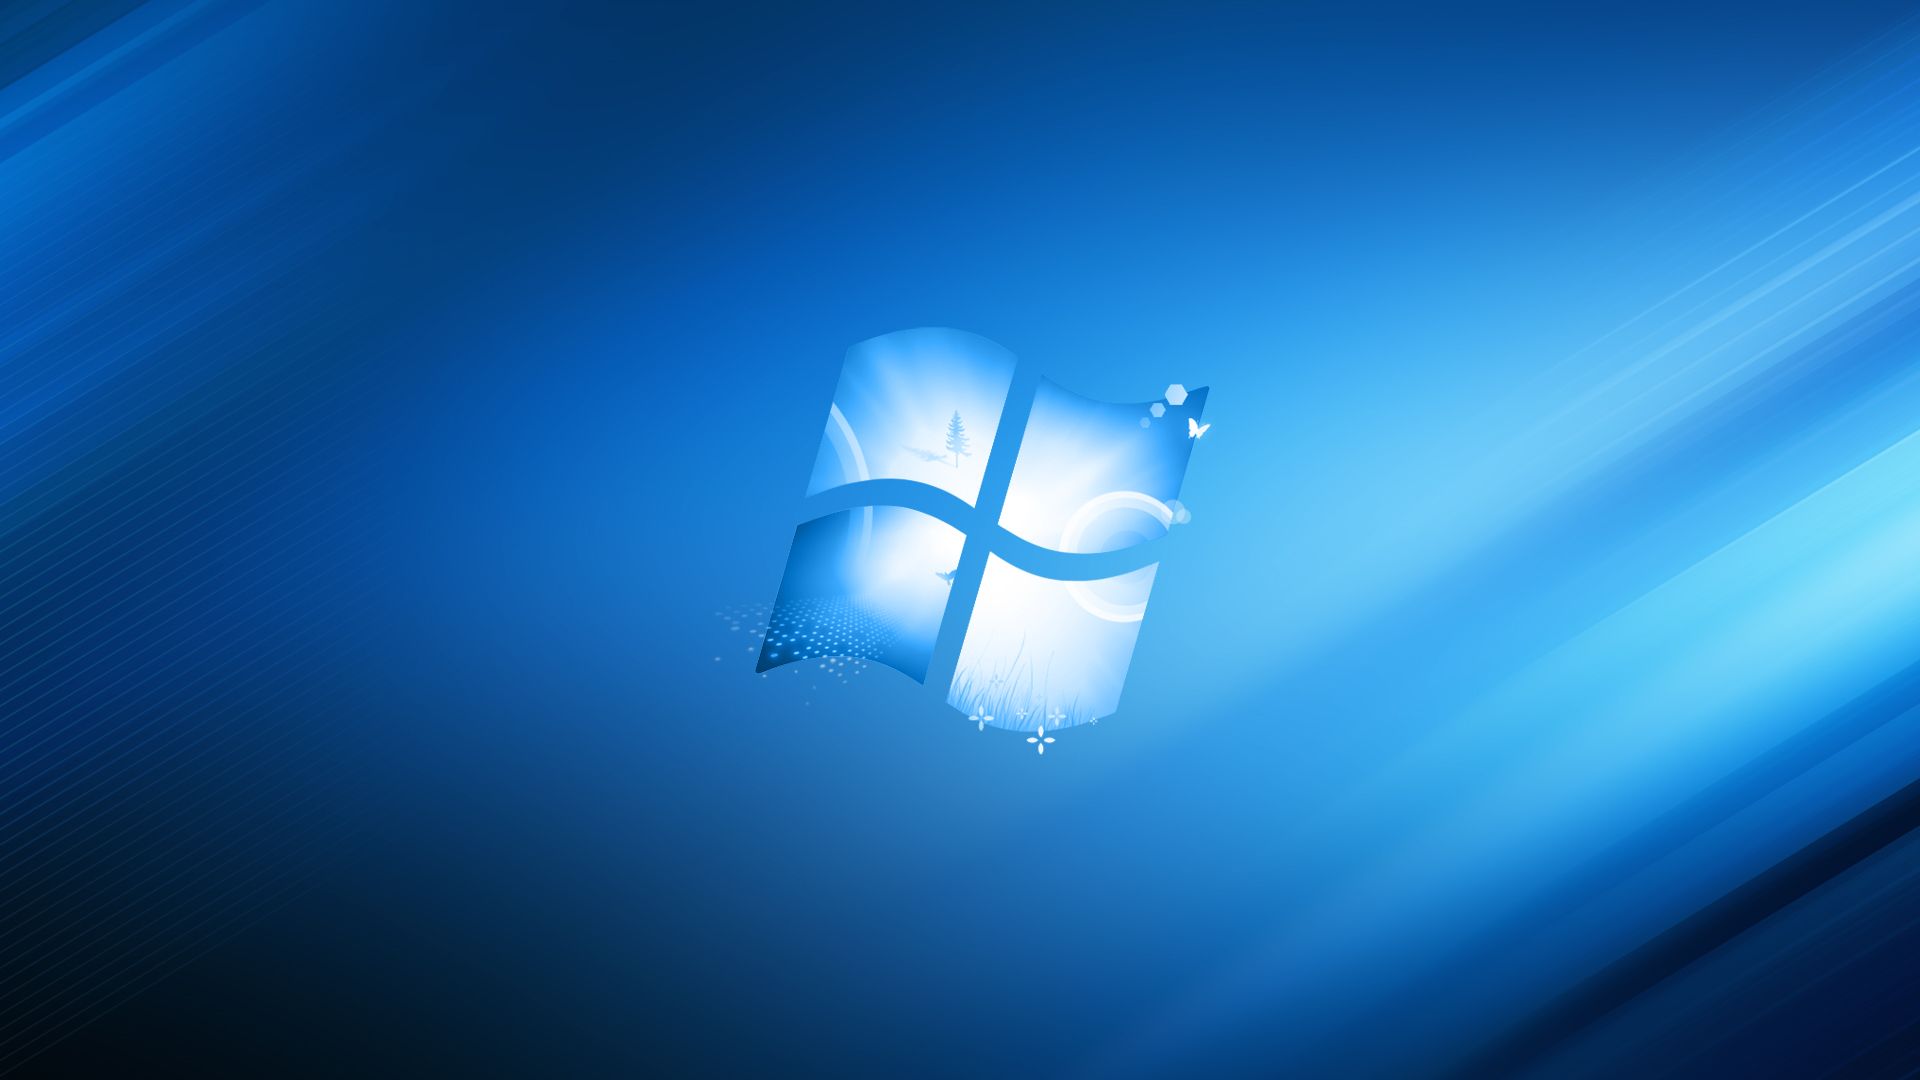 Windows 7 Blue.jpg